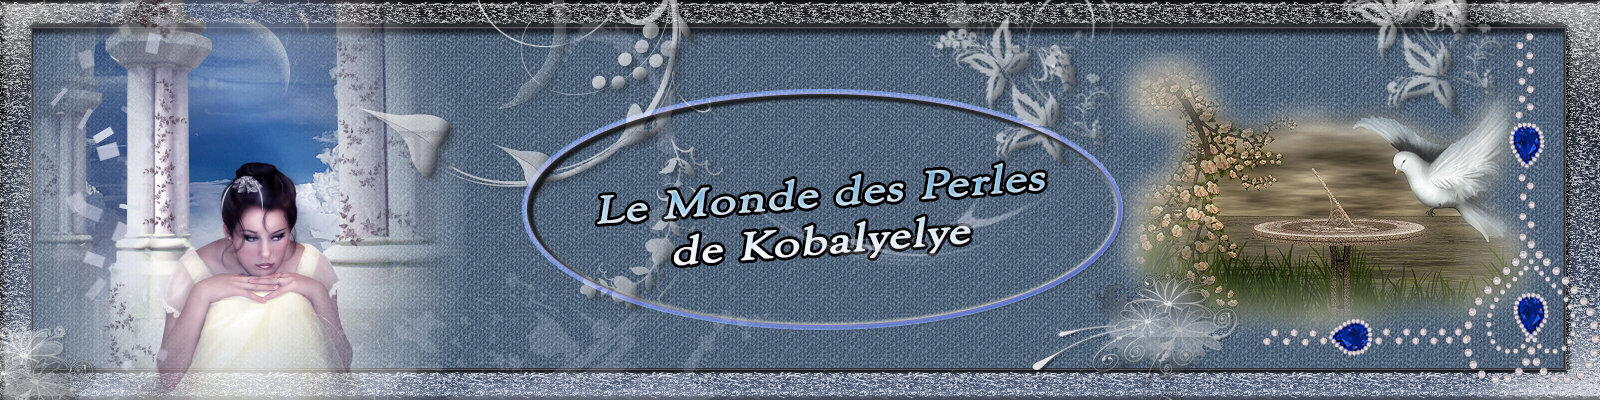 Le monde des perles de Kobalyelye